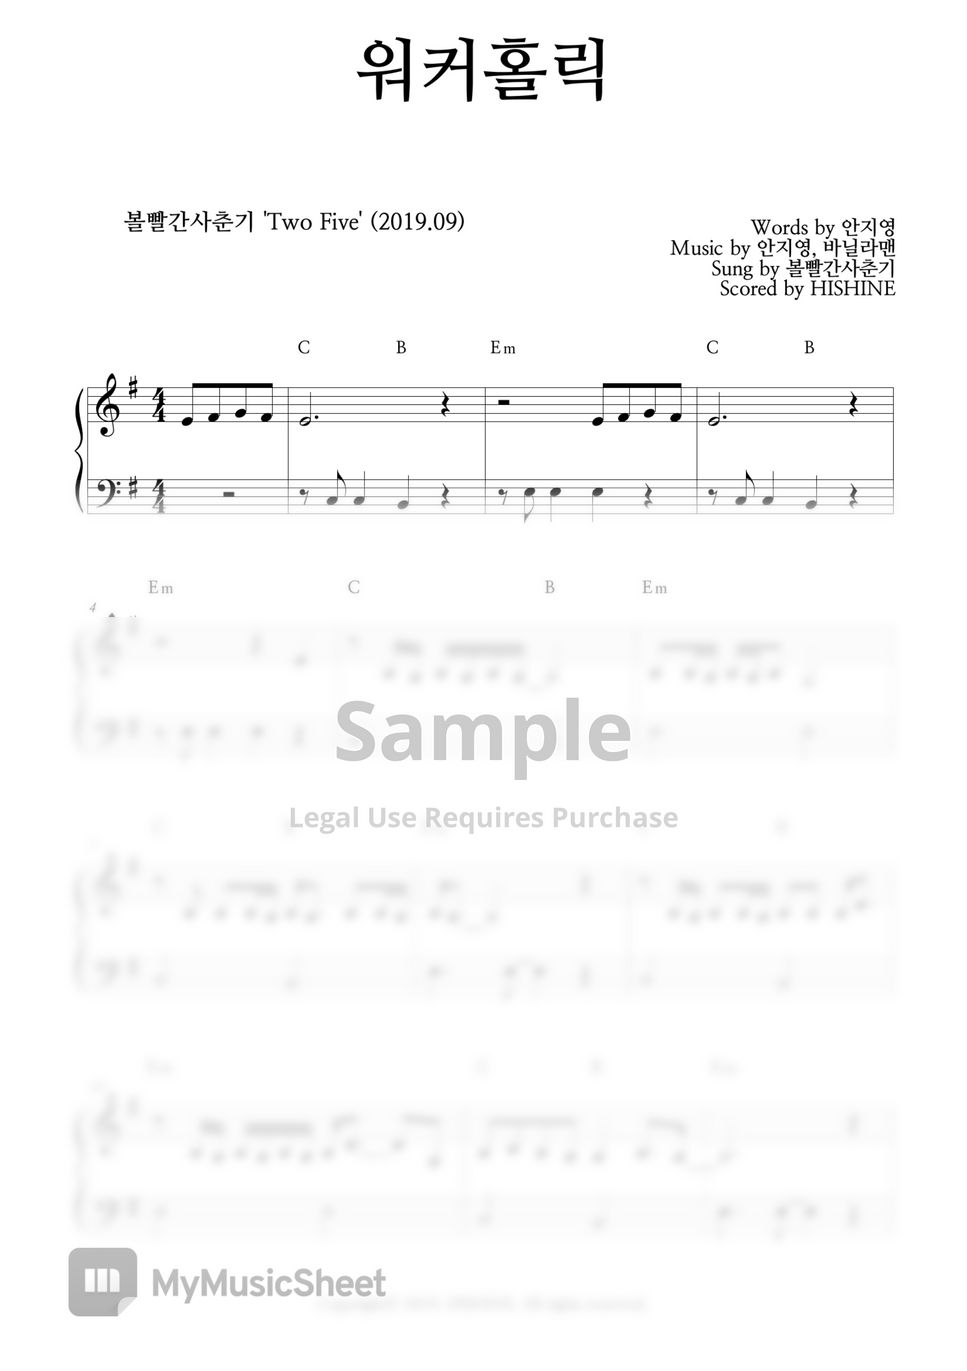 BOL4 - Workaholic Easy Piano Sheet